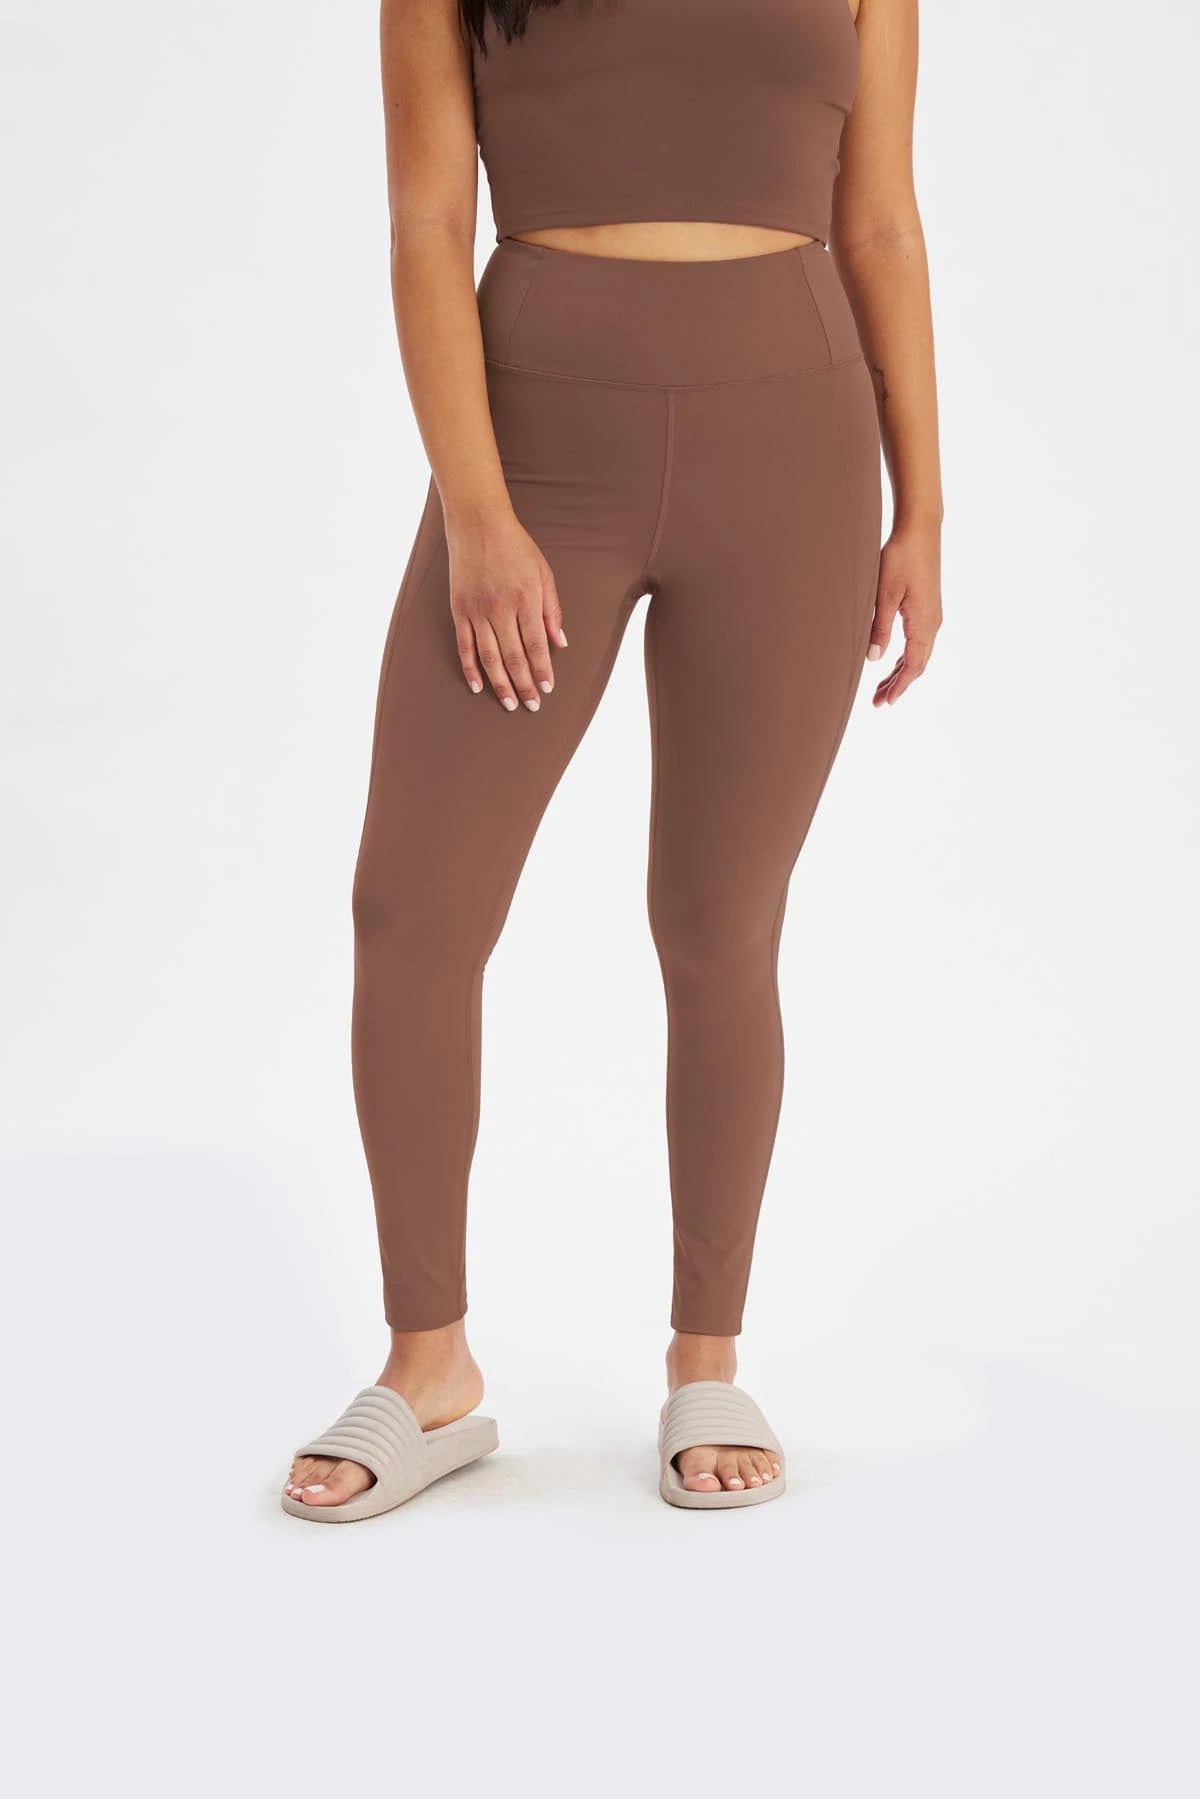 H&M Faux Leather Trousers Leggings U.K. Size 6 BNWT Gorgeous 😍 Dark Brown  | eBay